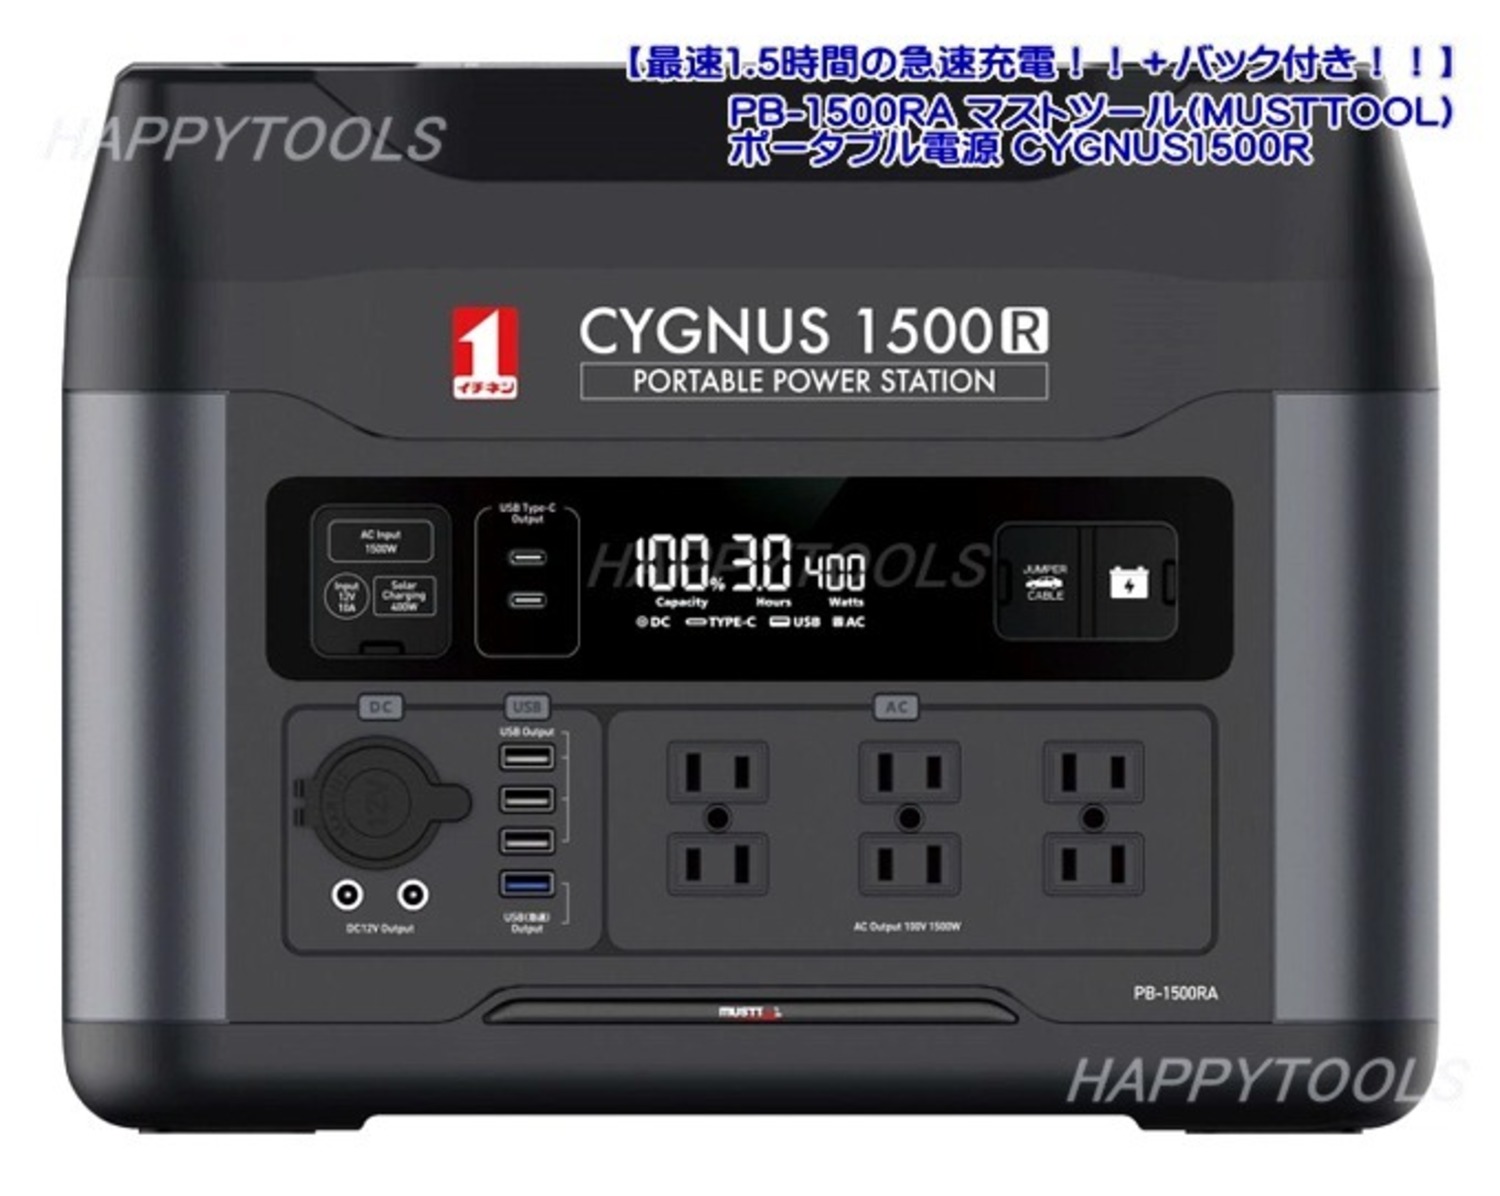 PB-1500RA ポータブル電源 CYGNUS1500R インボイス制度対応 代引発送不可 条件 付送料無料 税込特価